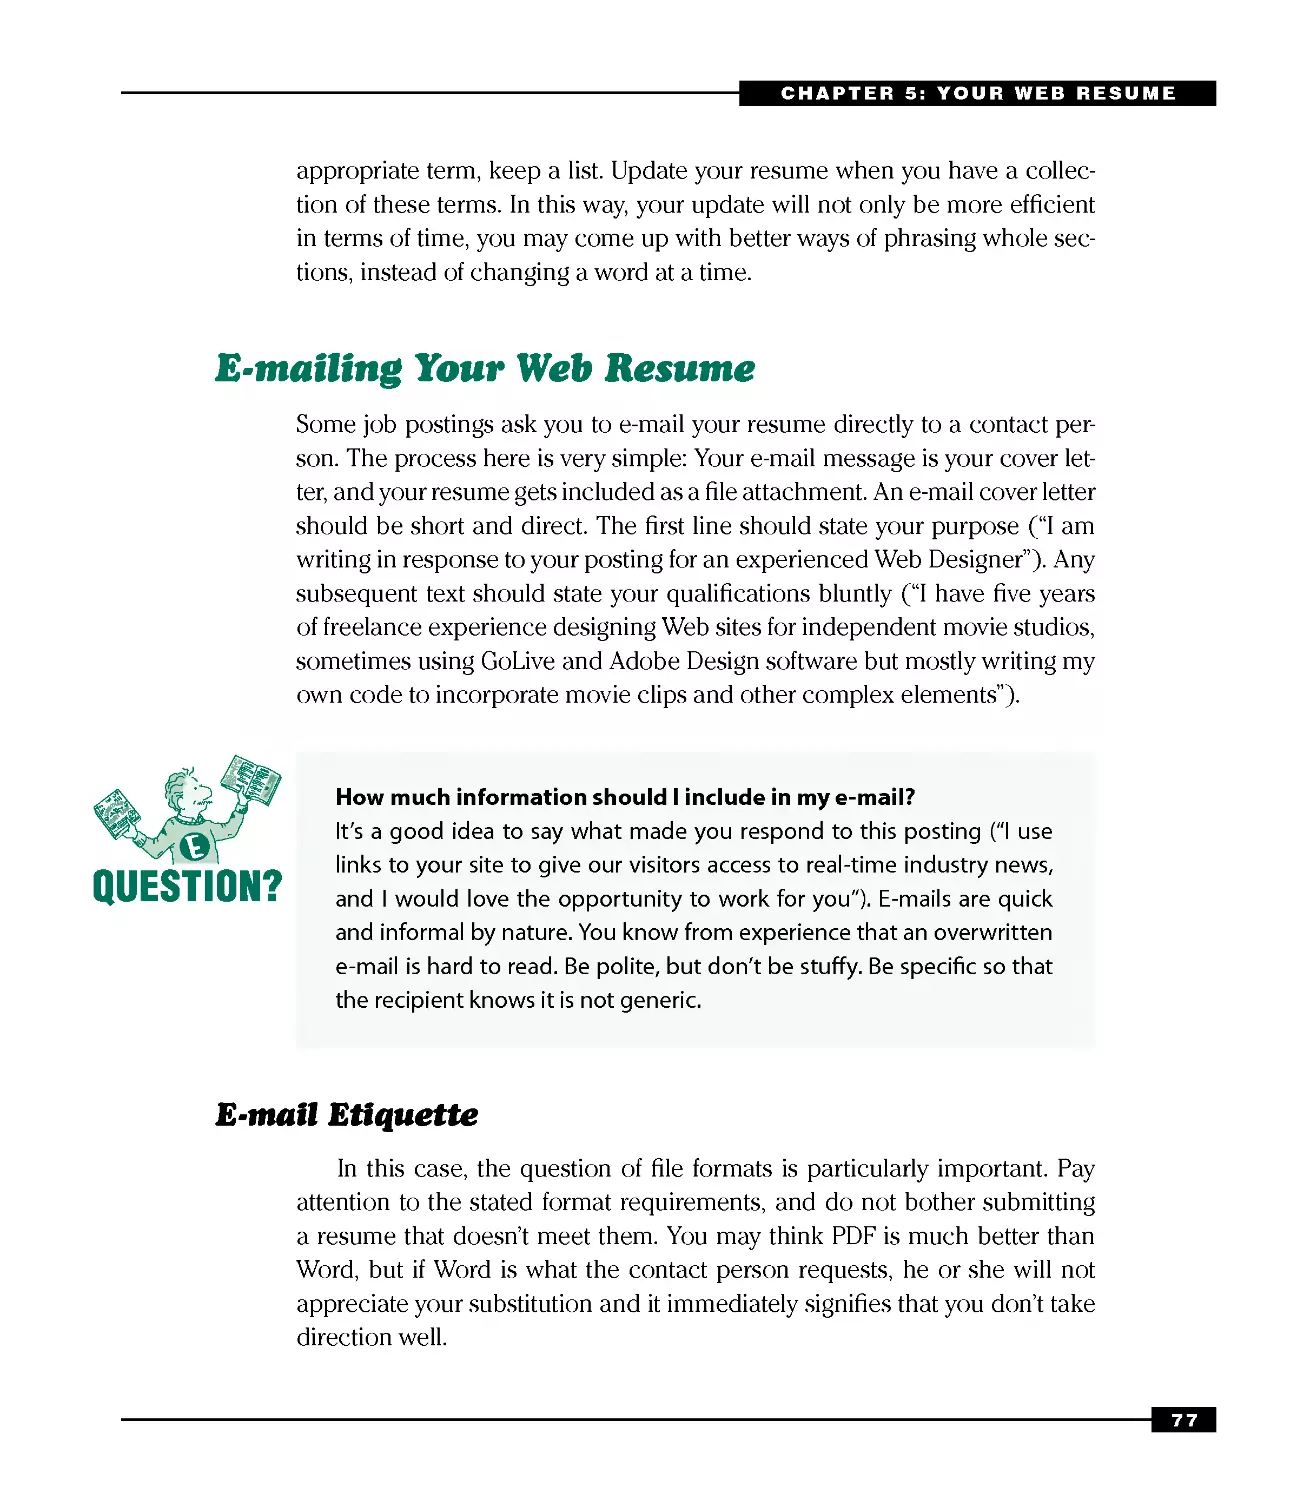 E-mailing Your Web Resume